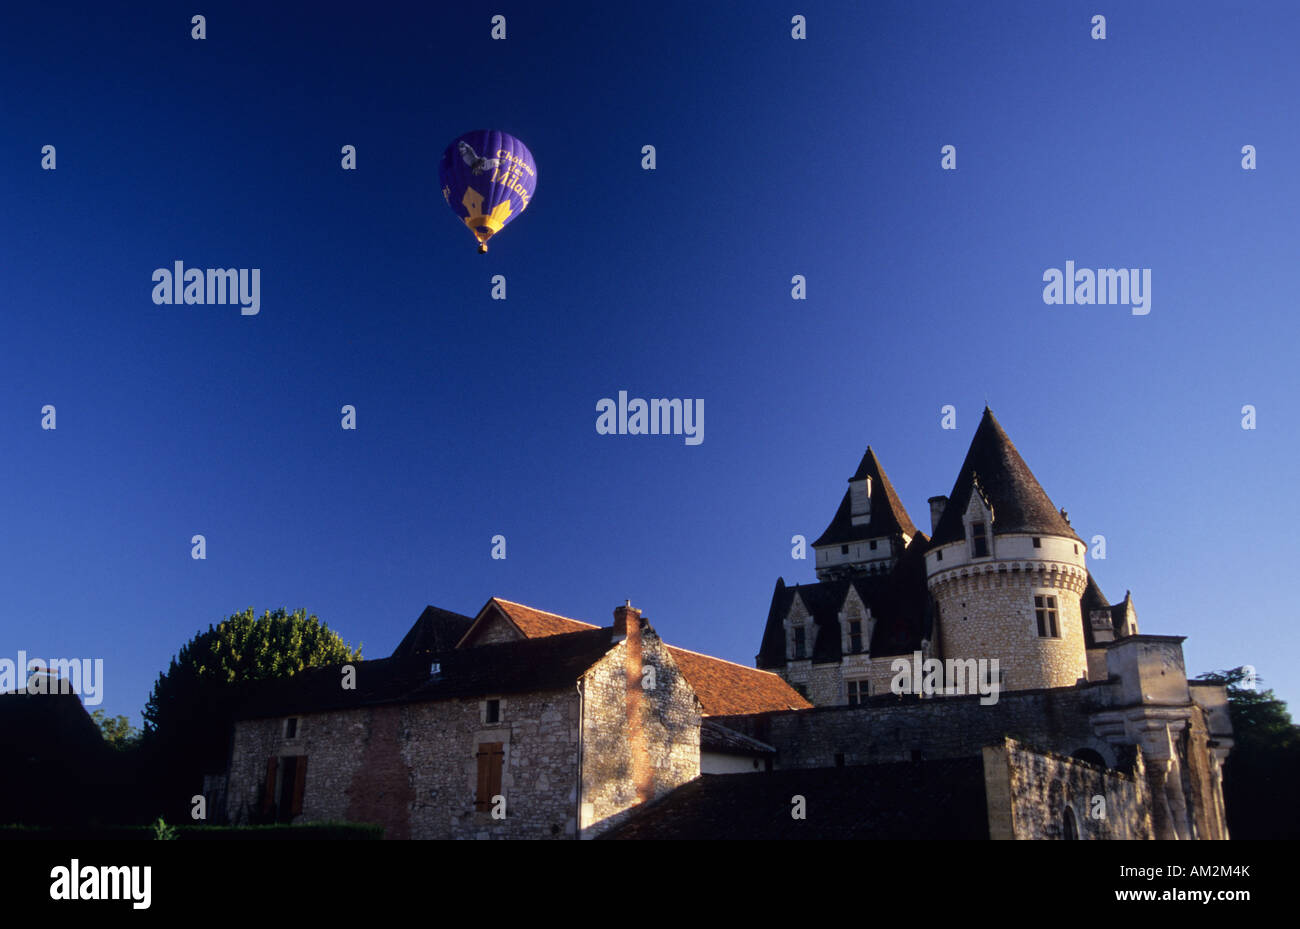 Hot air Balloon over the Chateau Les Milandes, Castlenaud la Chapelle. France Stock Photo